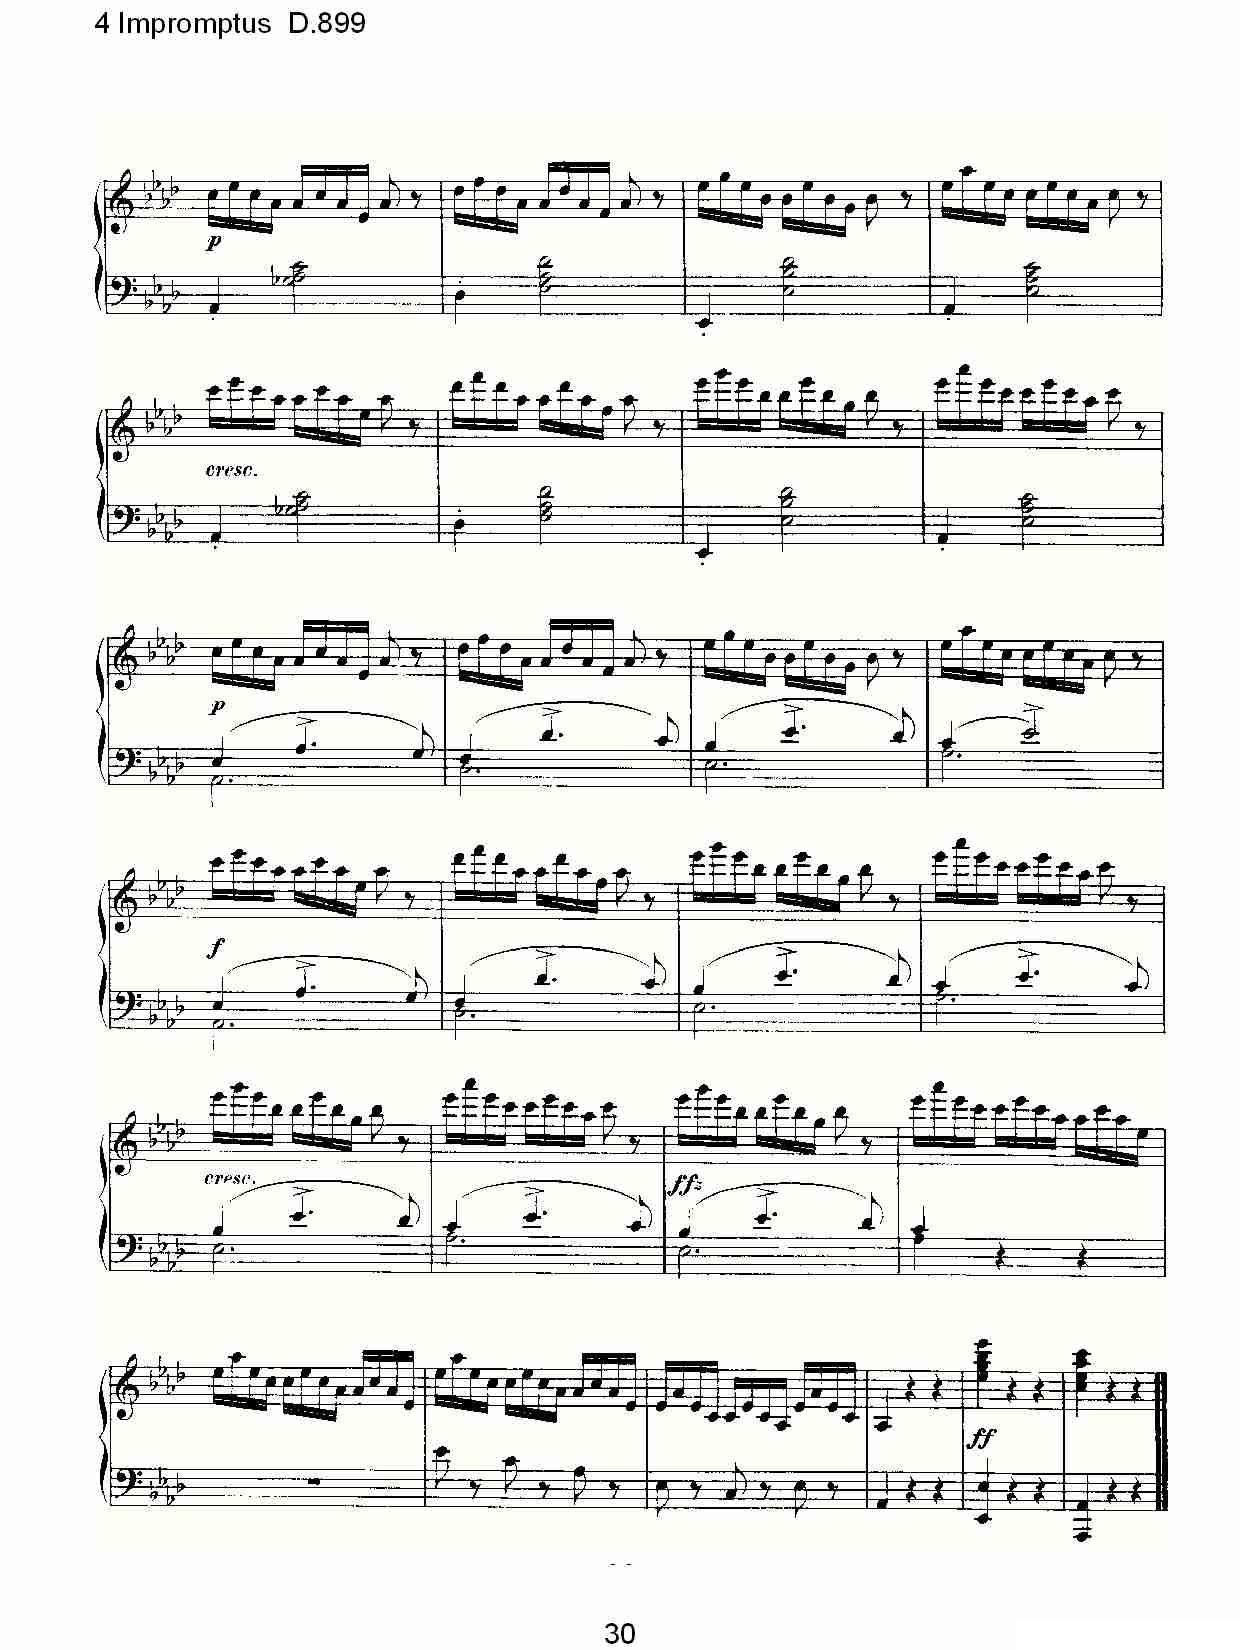 4 Impromptus D.899（4人即兴演奏 D.899）钢琴曲谱（图30）